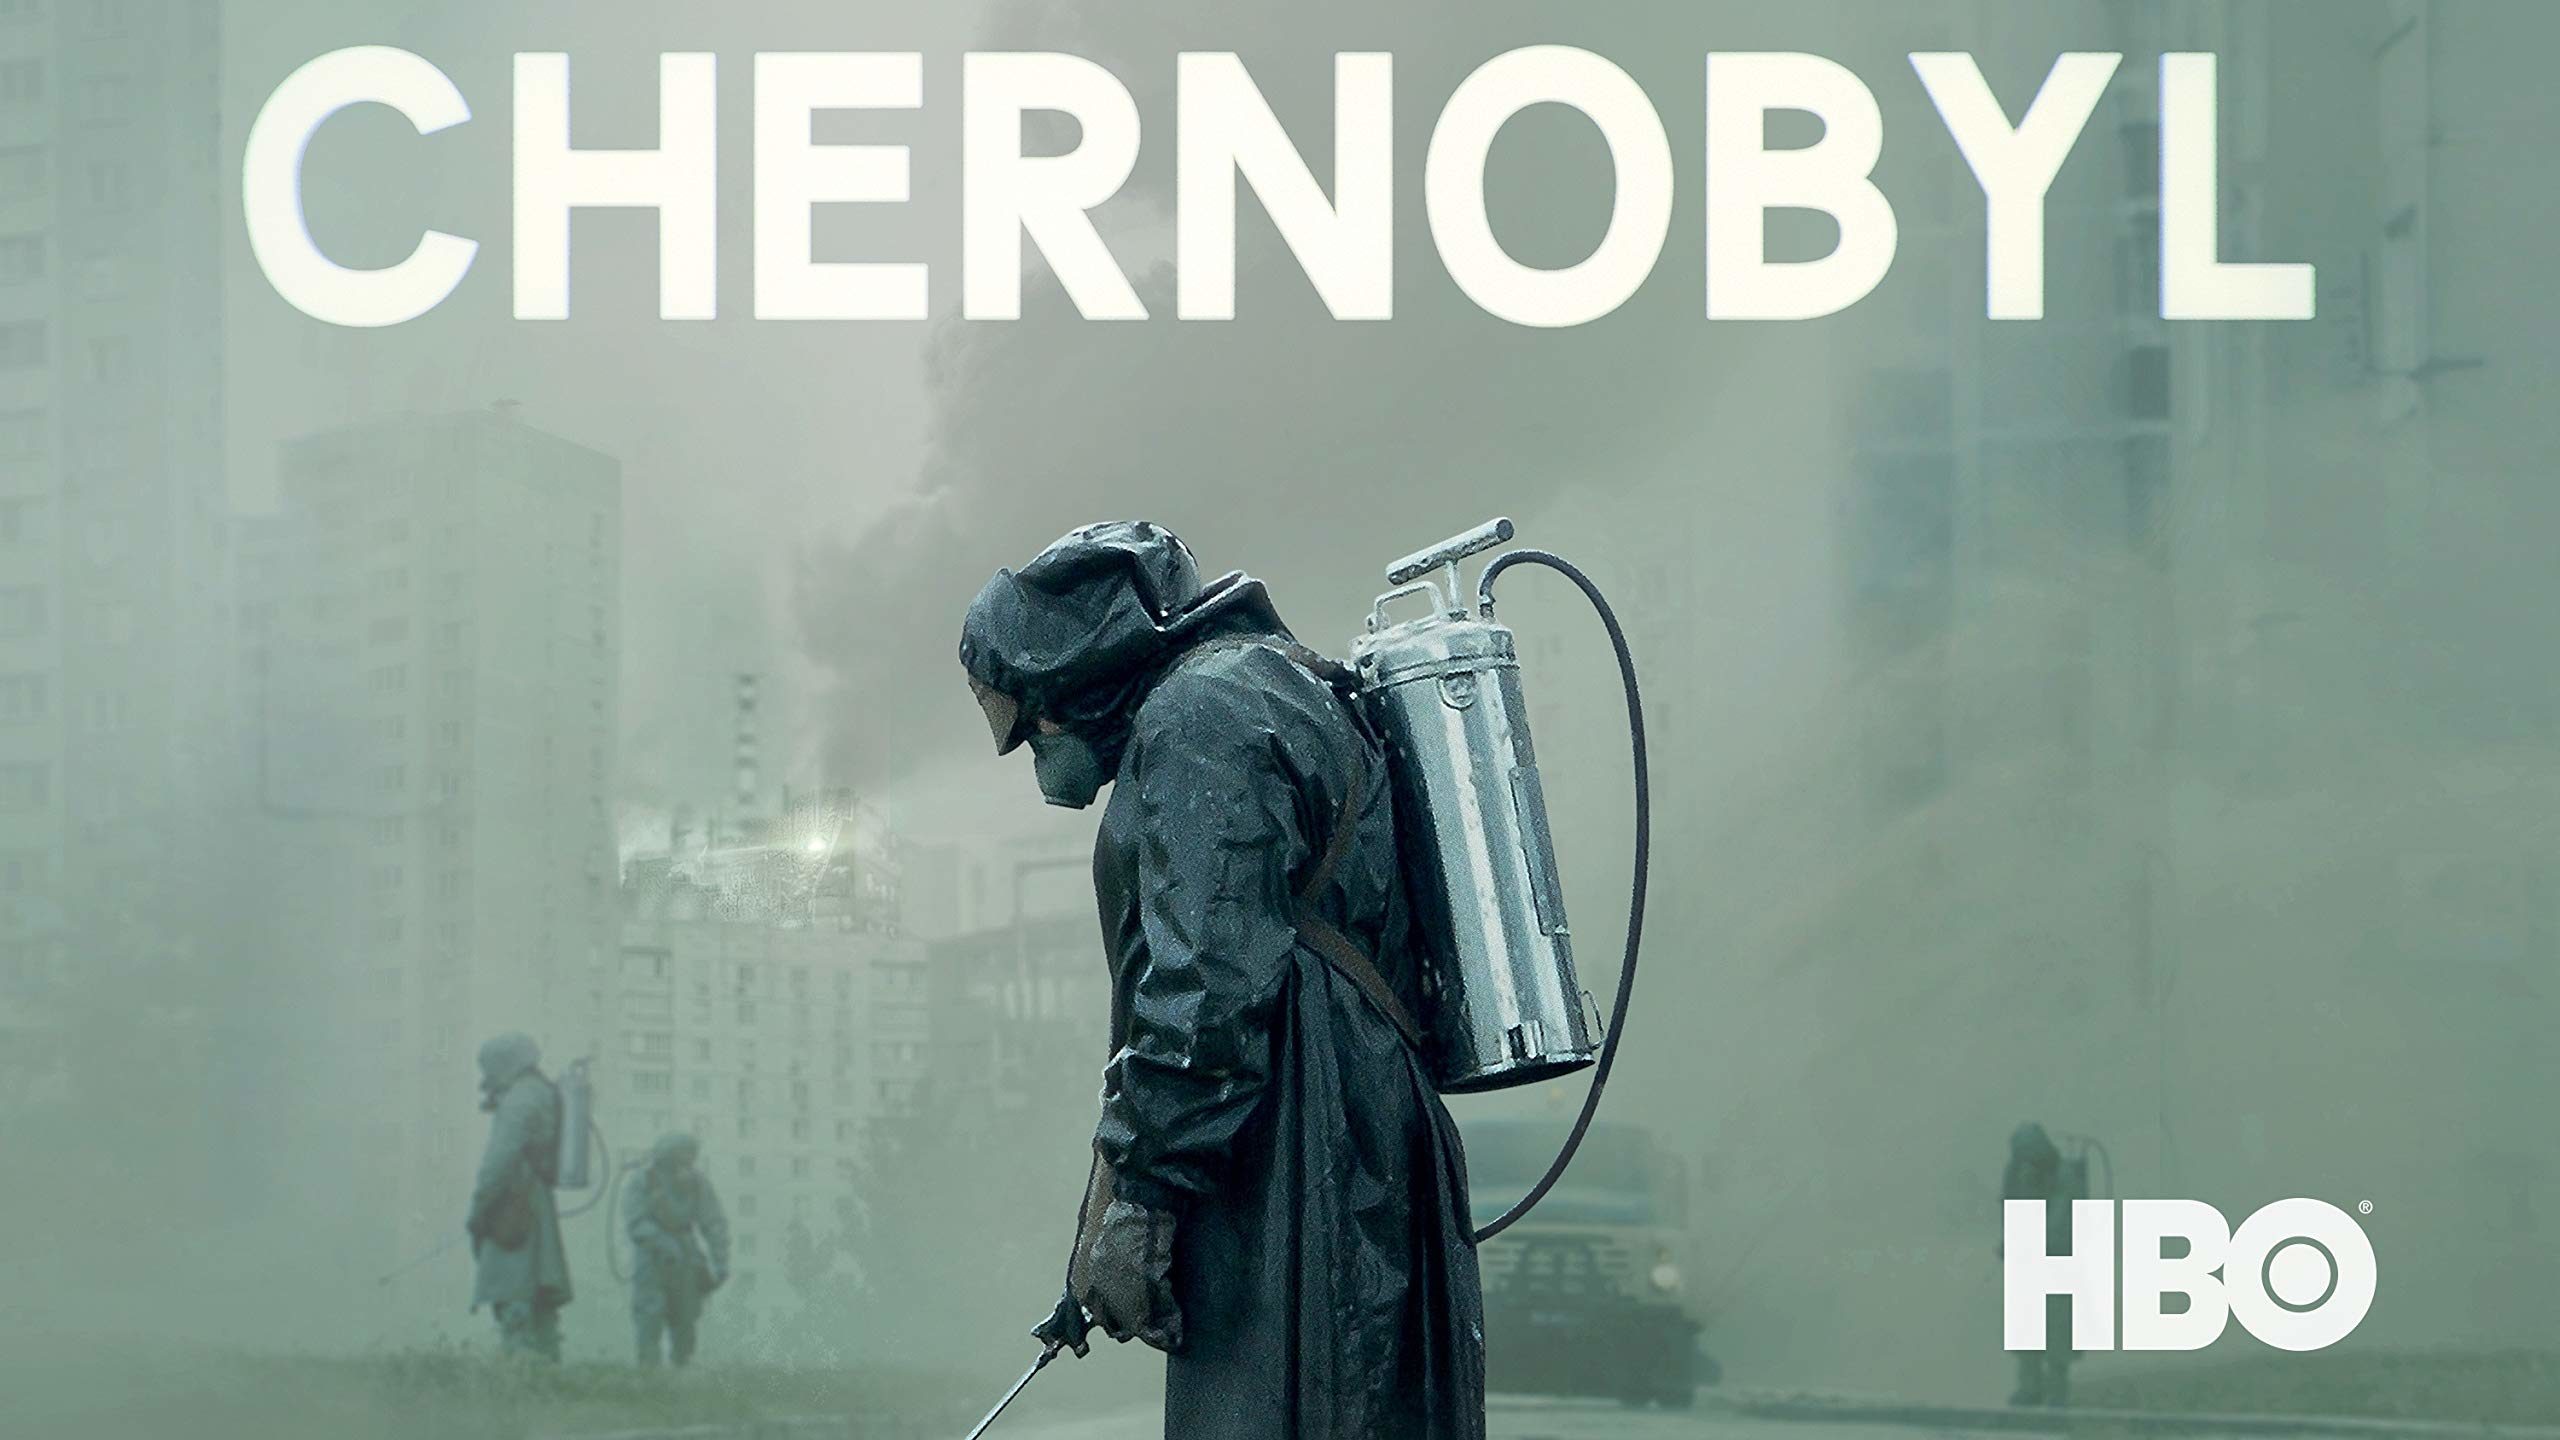 HBO Chernobyl real life story